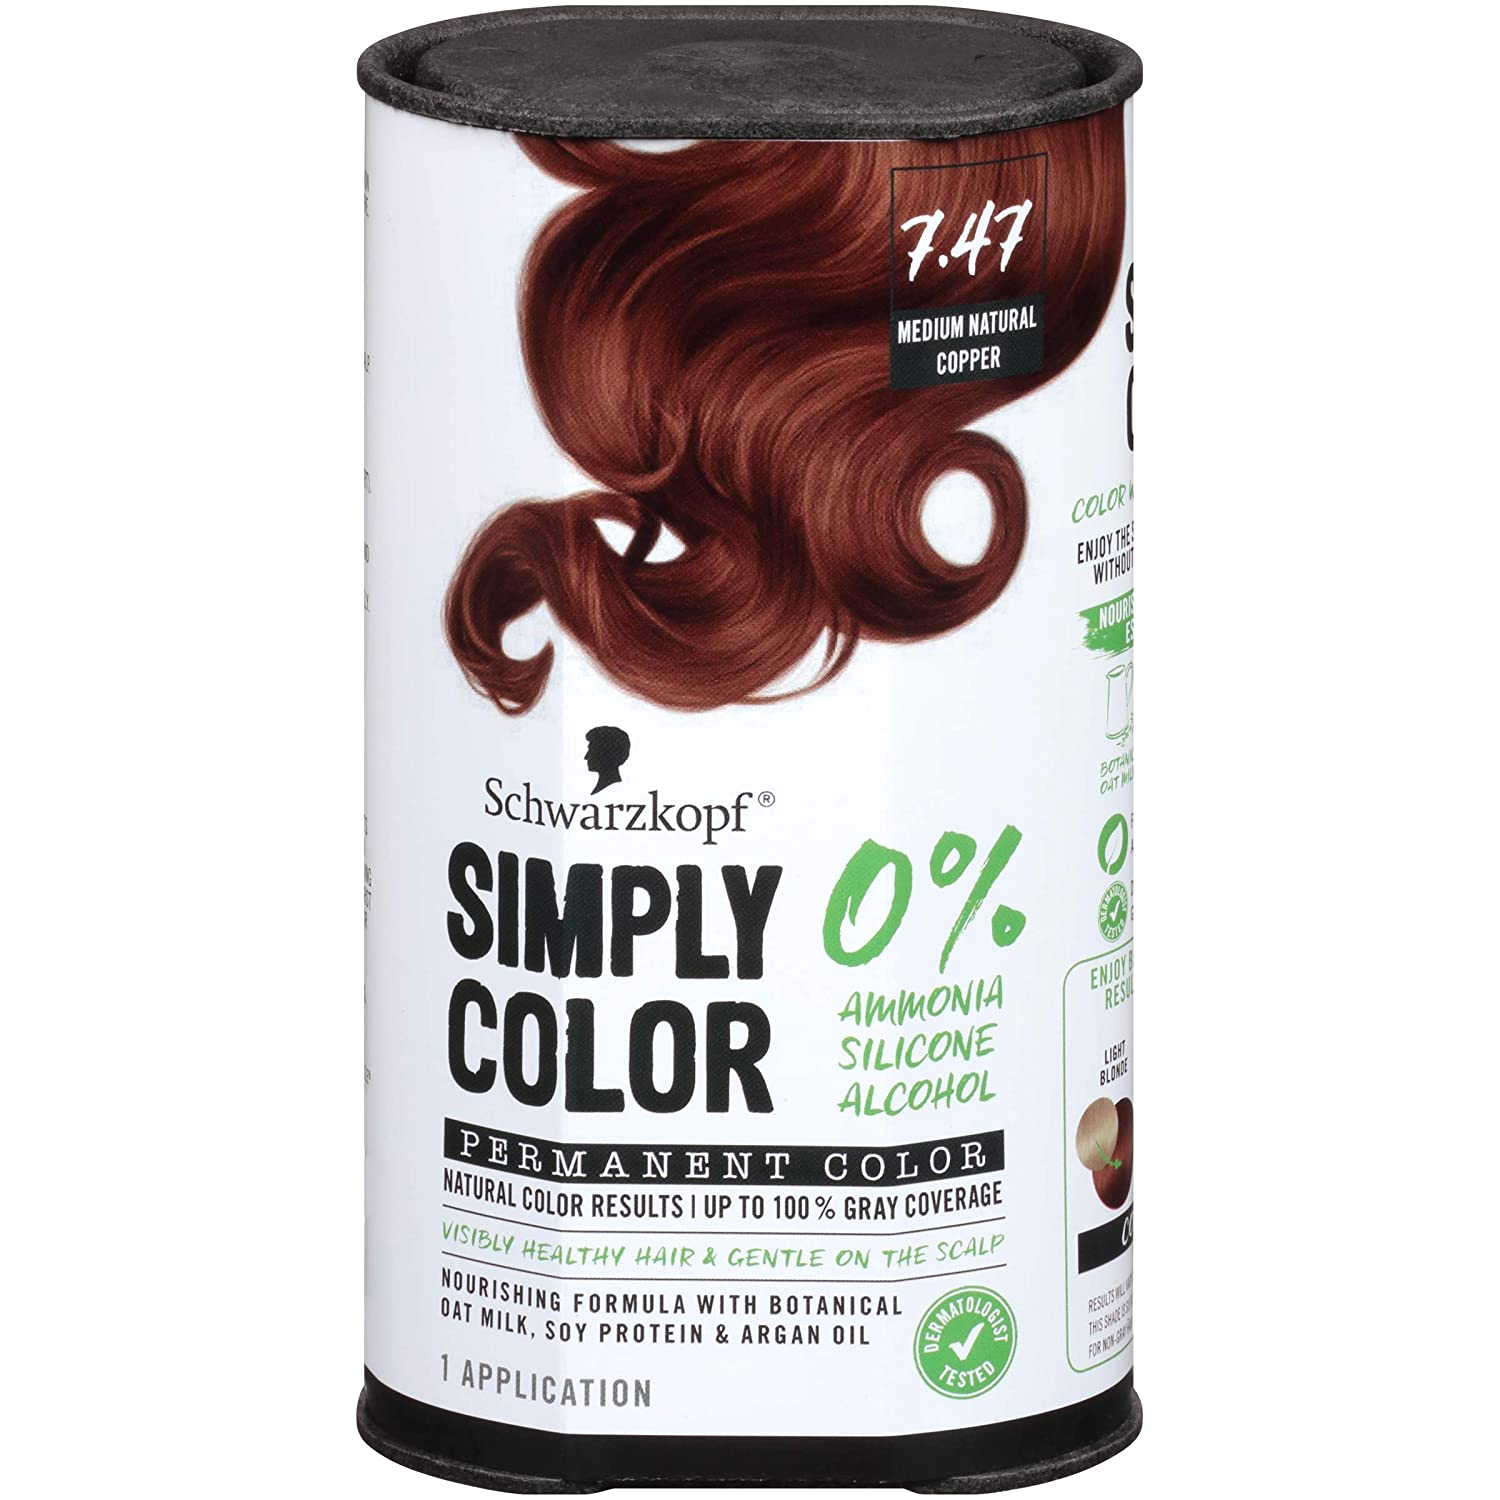 Schwarzkopf Simply Color Permanent Hair Color, 7.47 - Medium Natural Copper